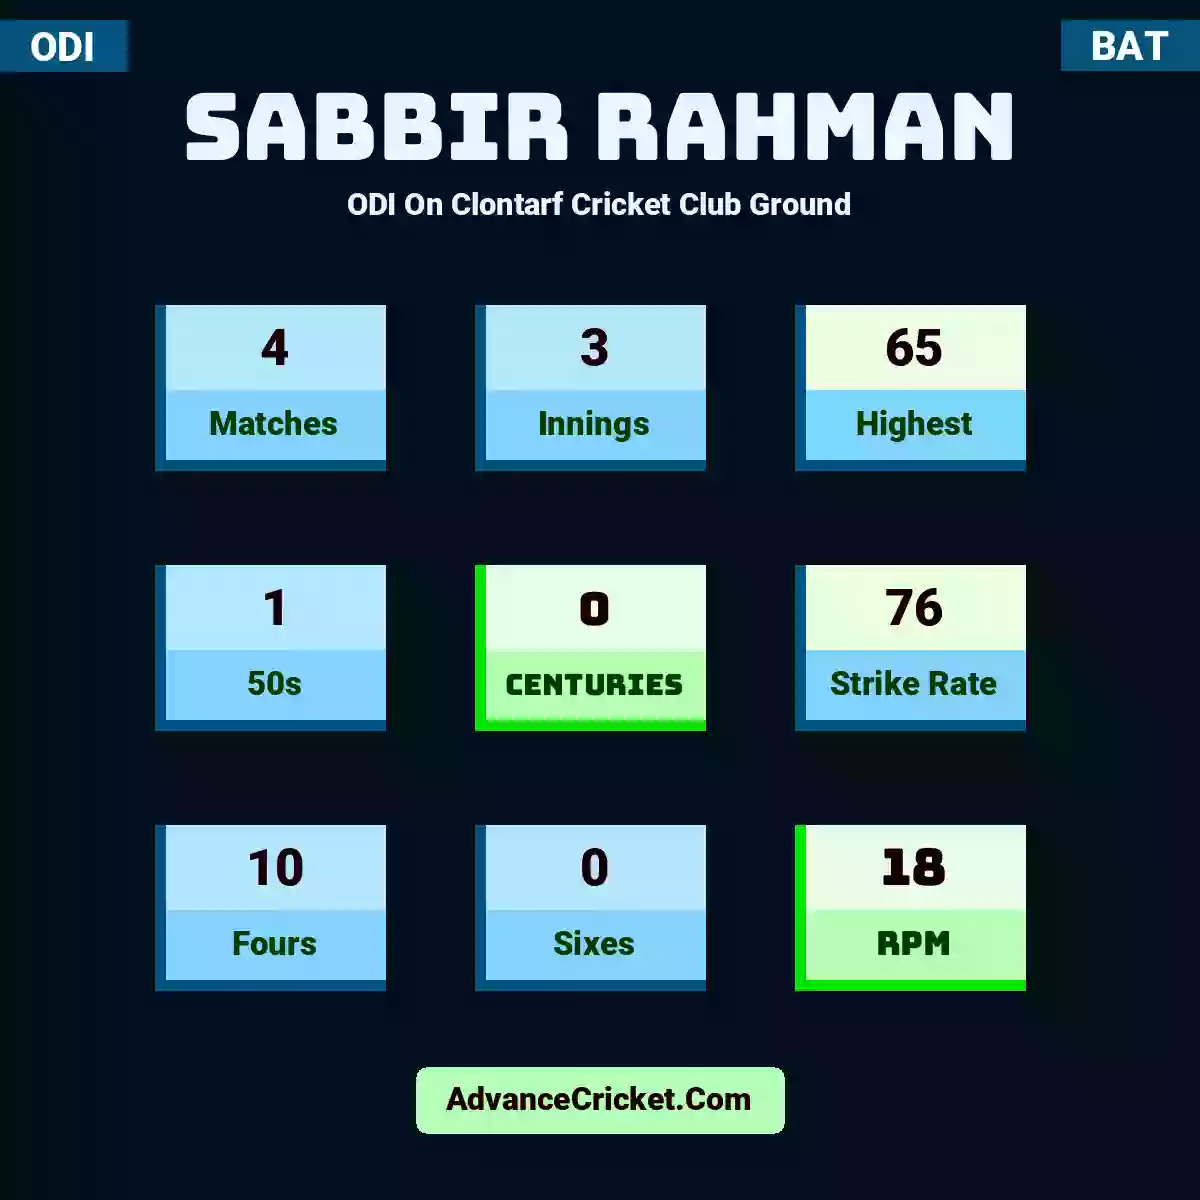 Sabbir Rahman ODI  On Clontarf Cricket Club Ground, Sabbir Rahman played 4 matches, scored 65 runs as highest, 1 half-centuries, and 0 centuries, with a strike rate of 76. S.Rahman hit 10 fours and 0 sixes, with an RPM of 18.